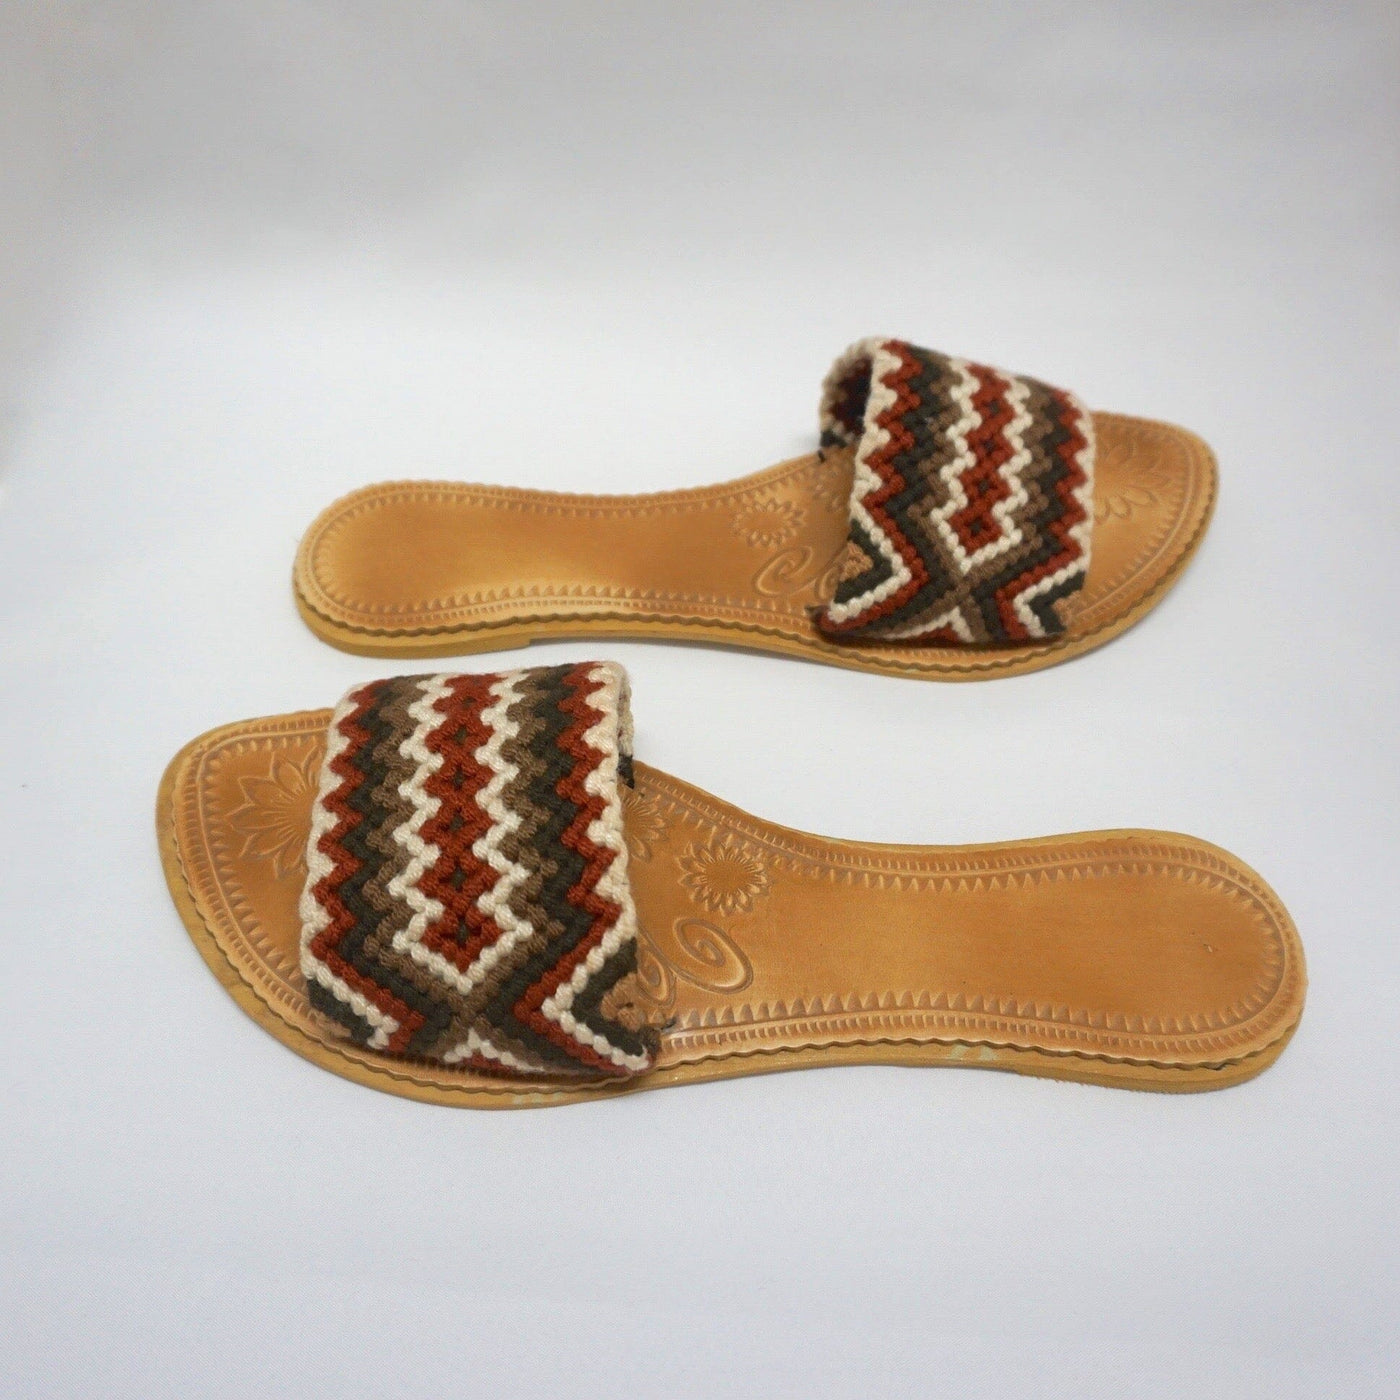 Colorful Handwoven Sandals - Wayuu Slide Sandals